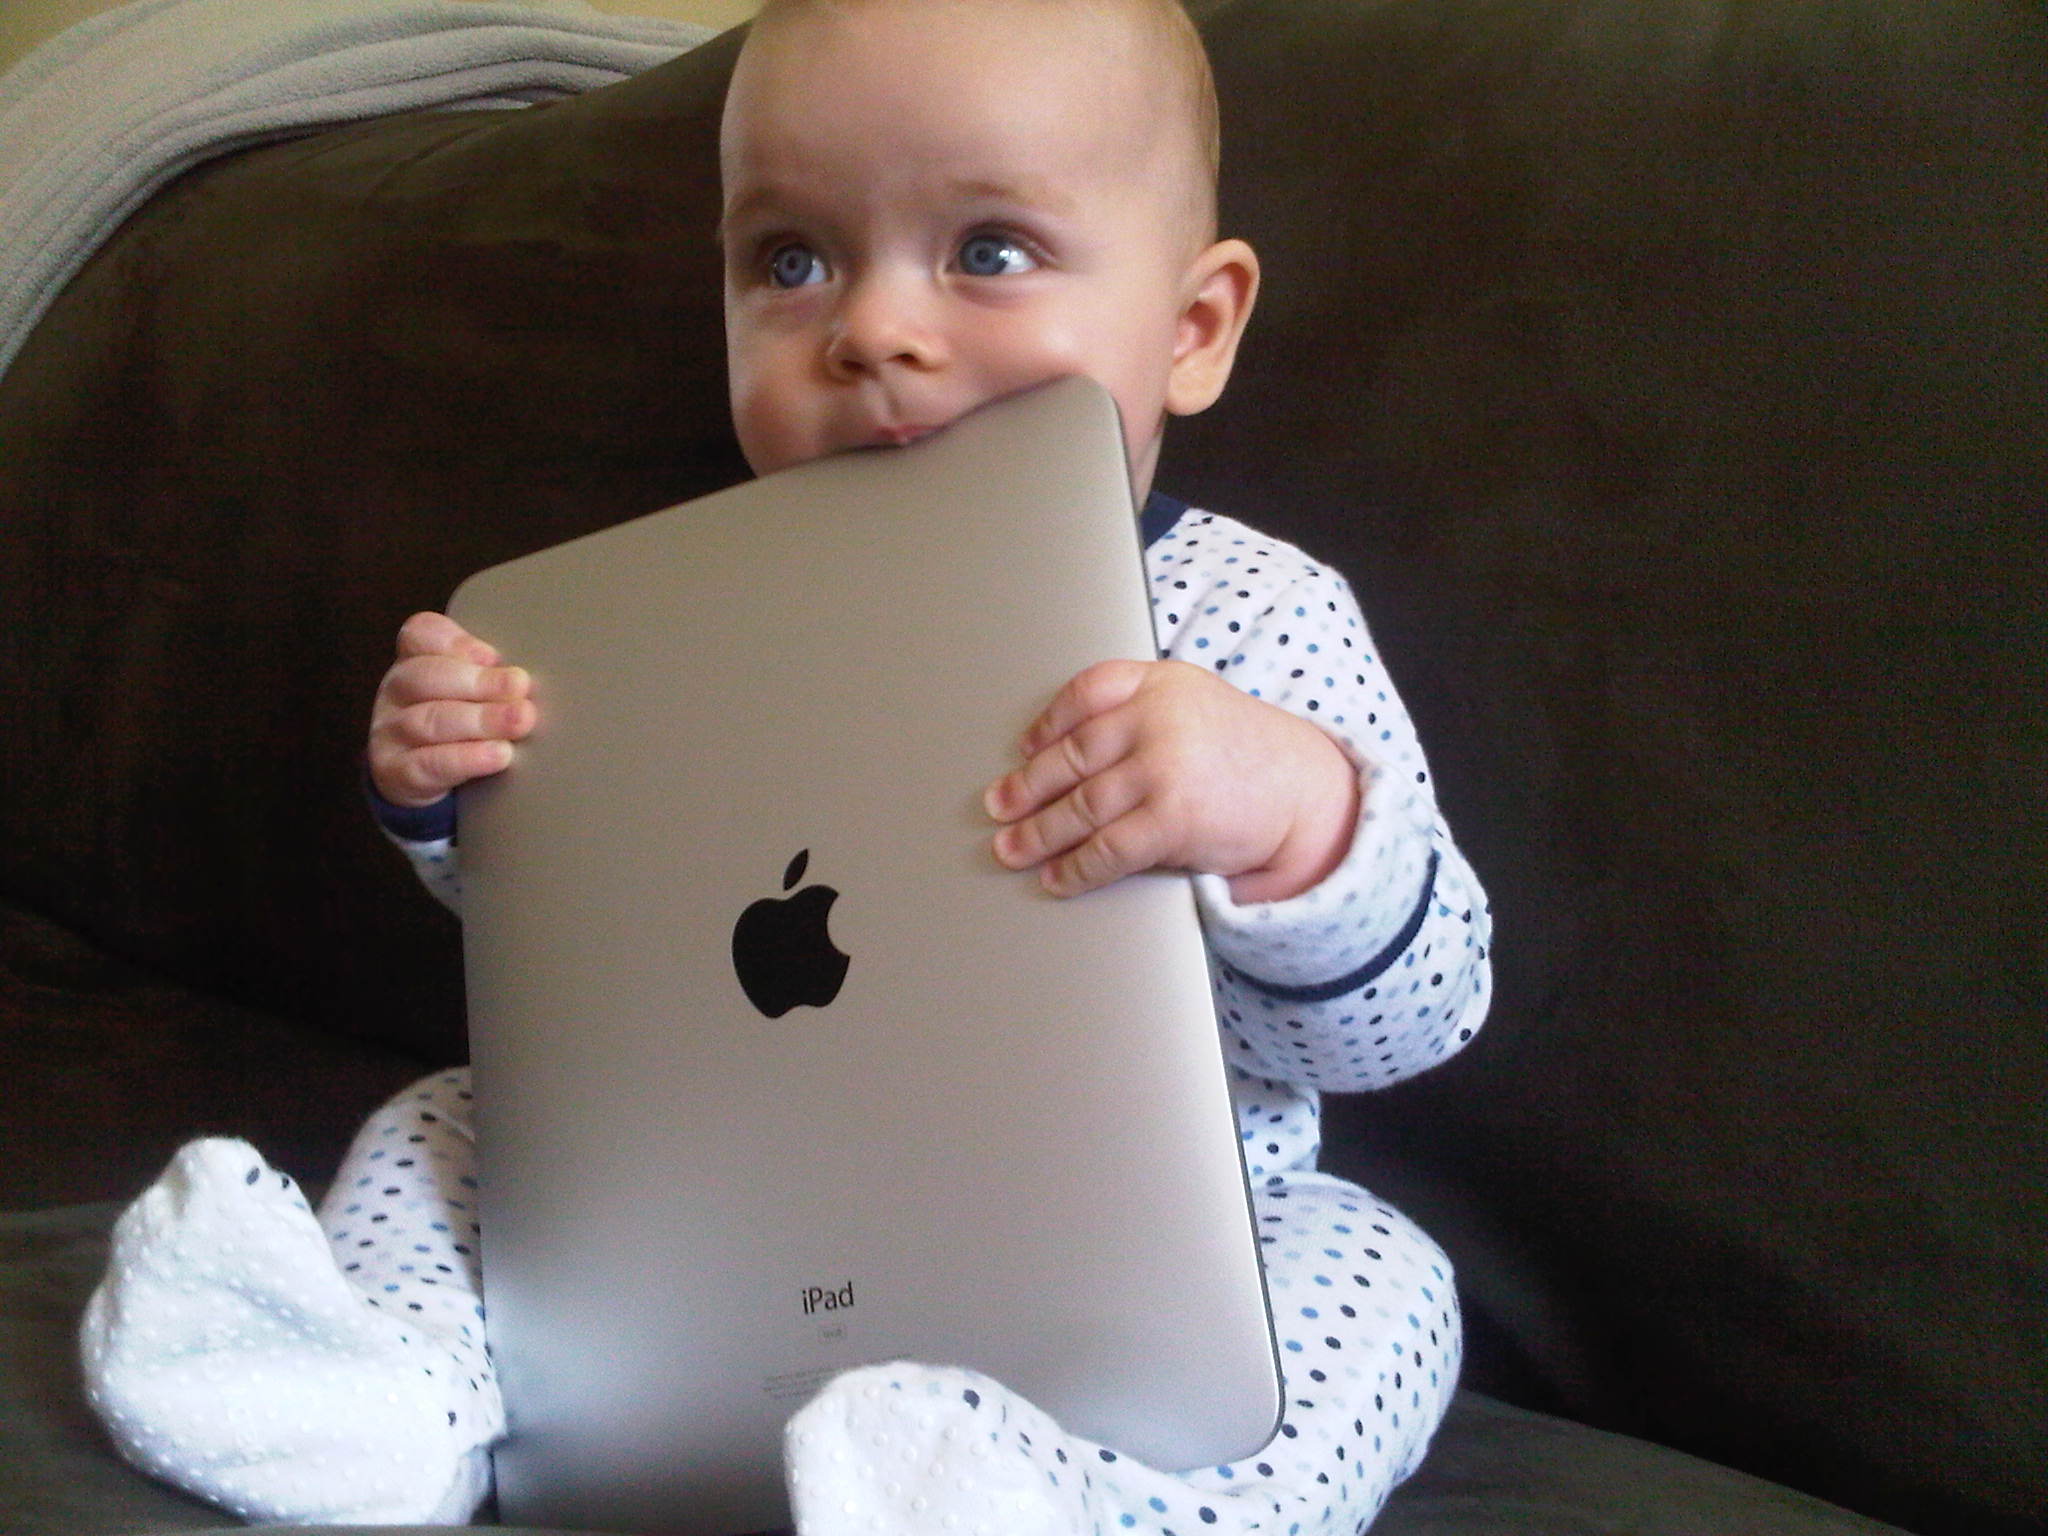 Baby holding Apple iPad